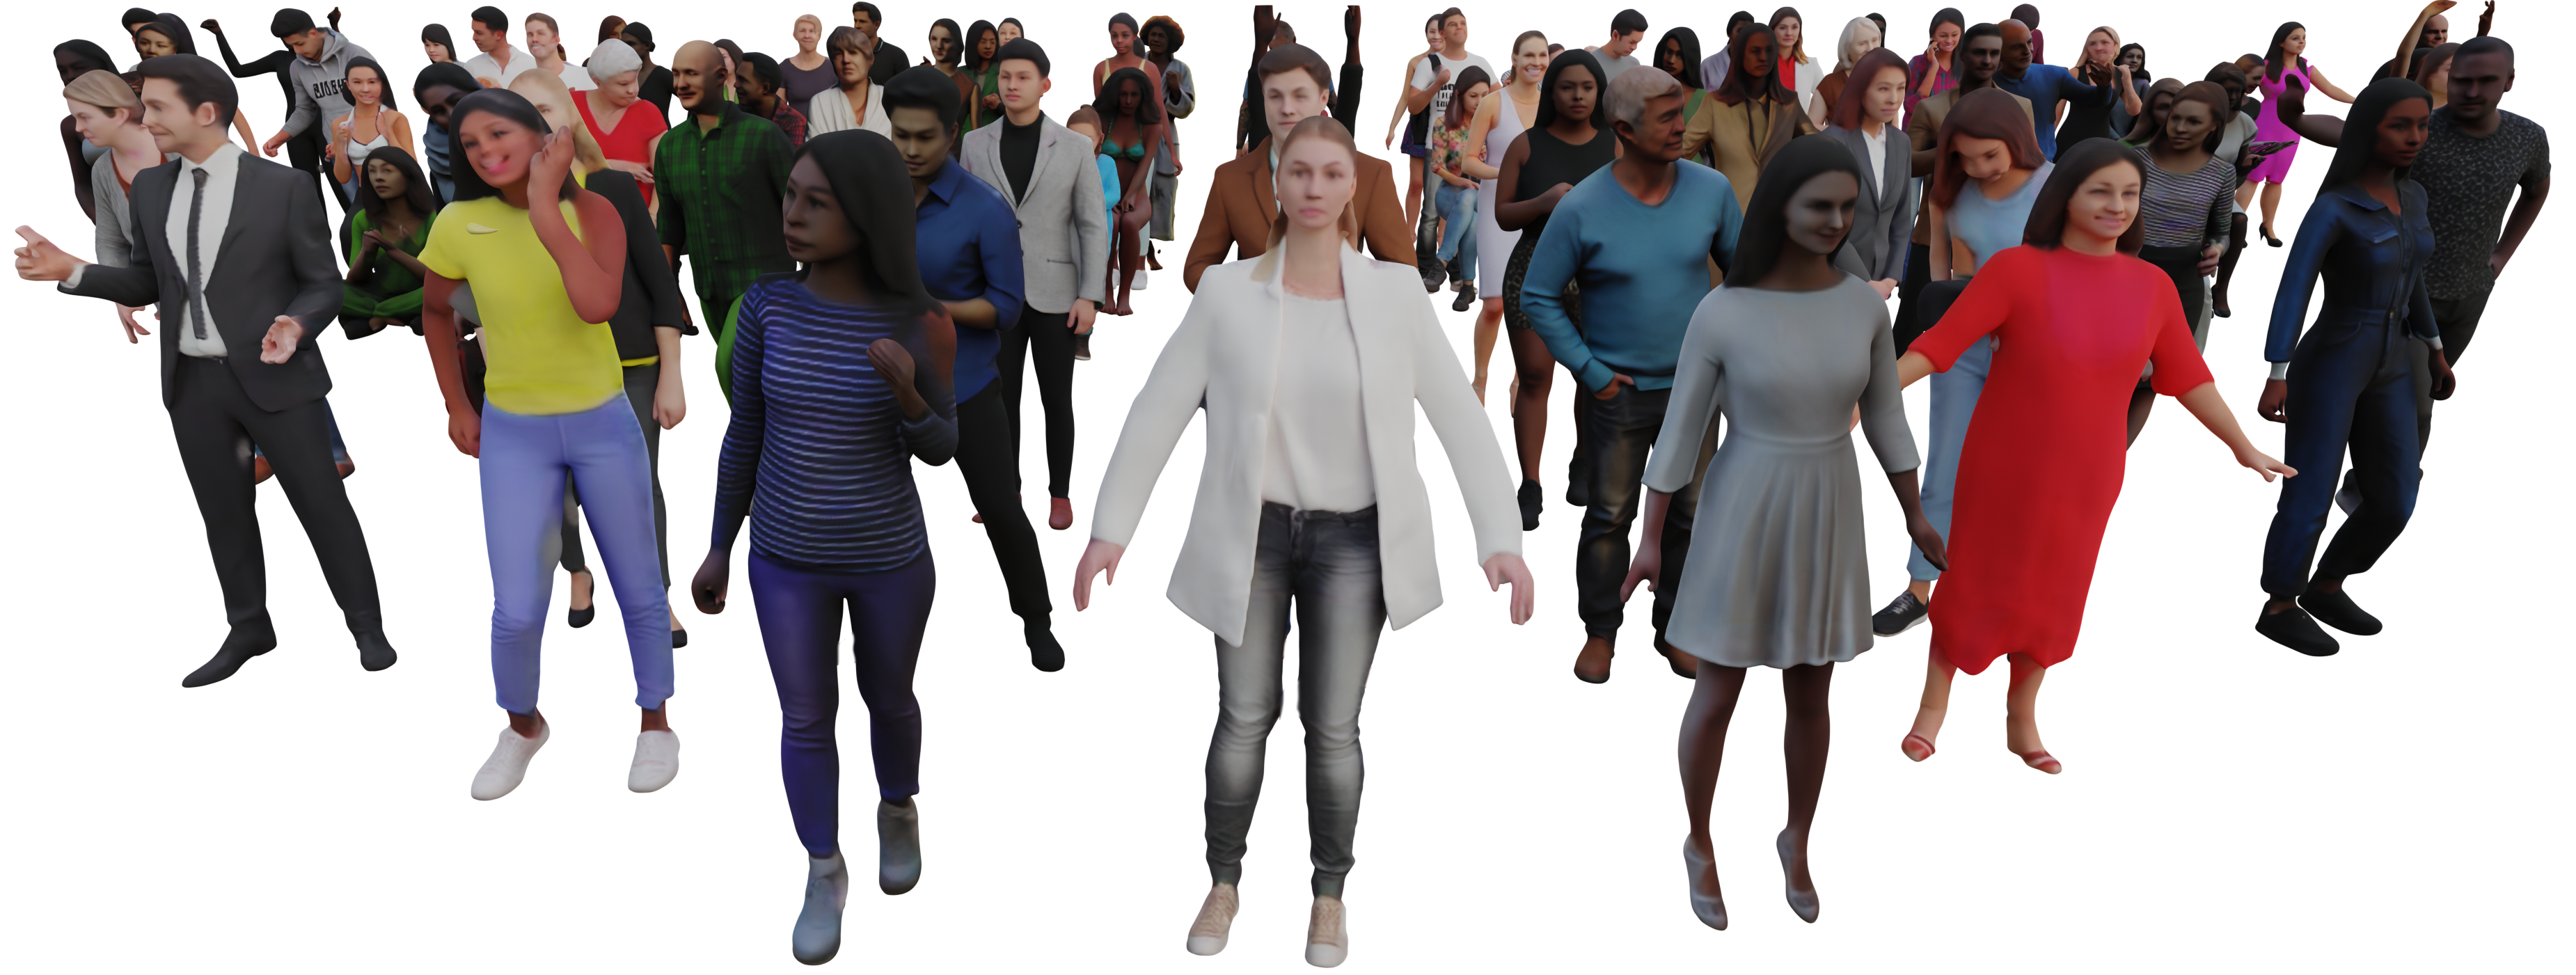 Instant 3D Human Avatar Generation using Image Diffusion Models